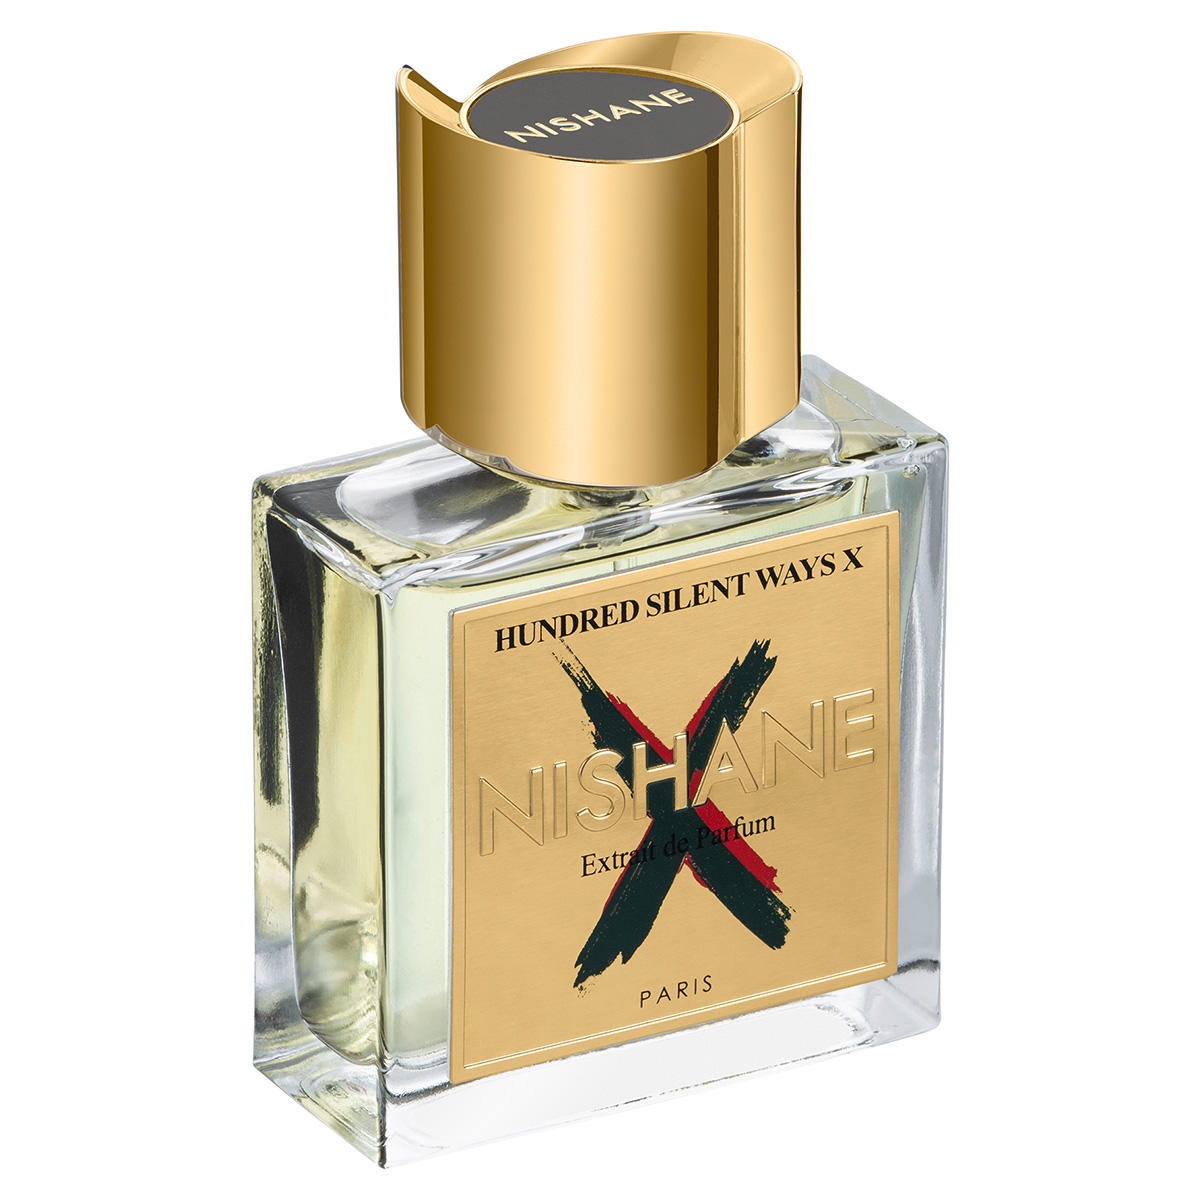 NISHANE Hundred Silent Ways X Eau de Parfum 50 ml - 2